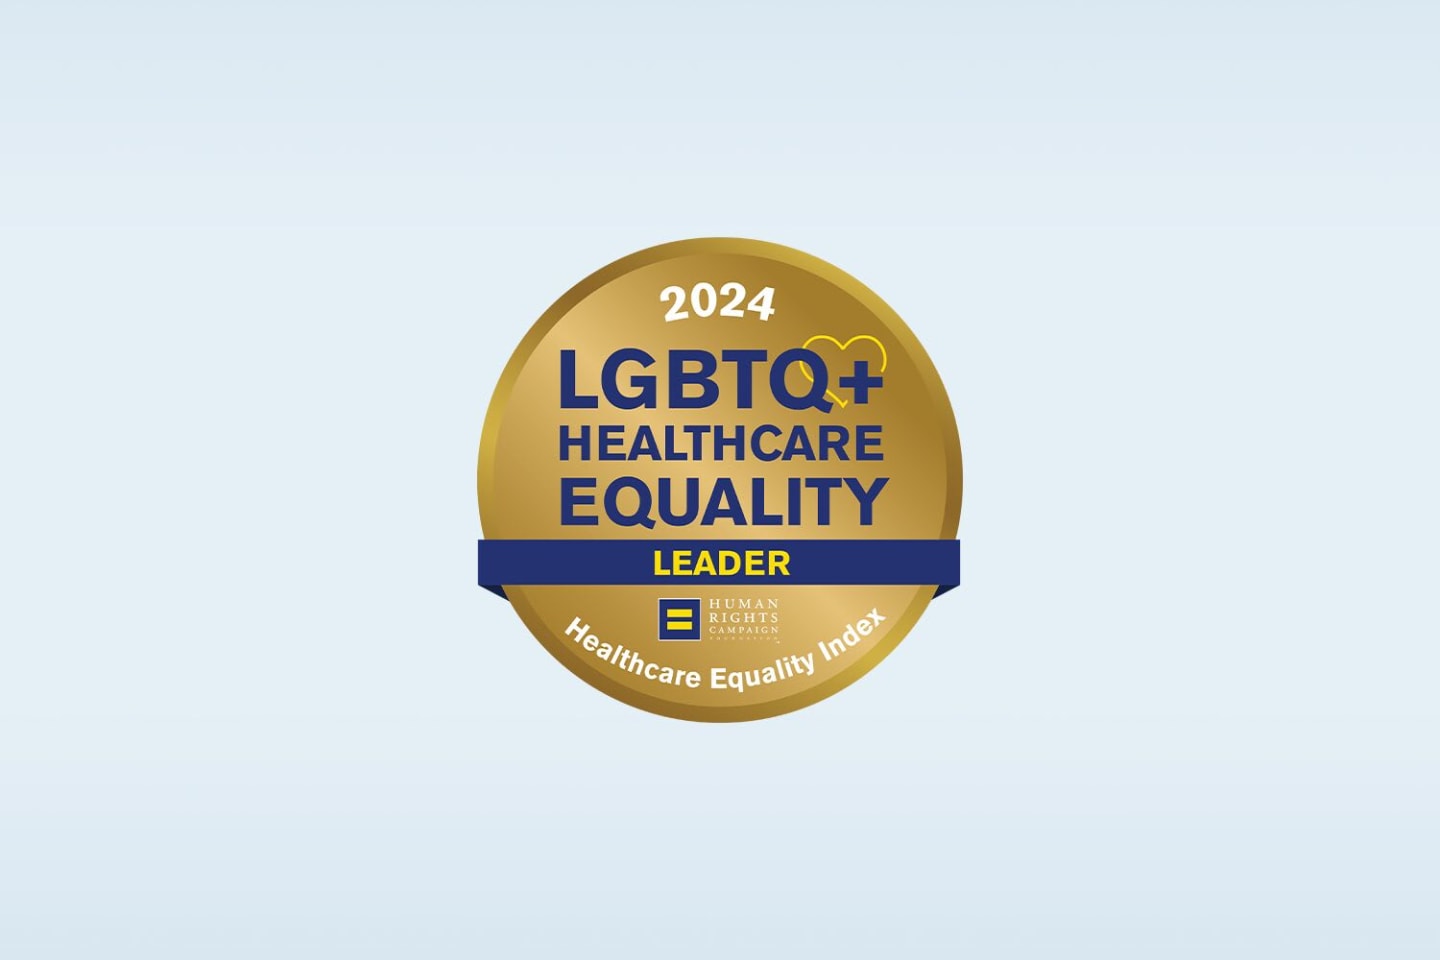 2024 LBGTQ Healthcare Equality